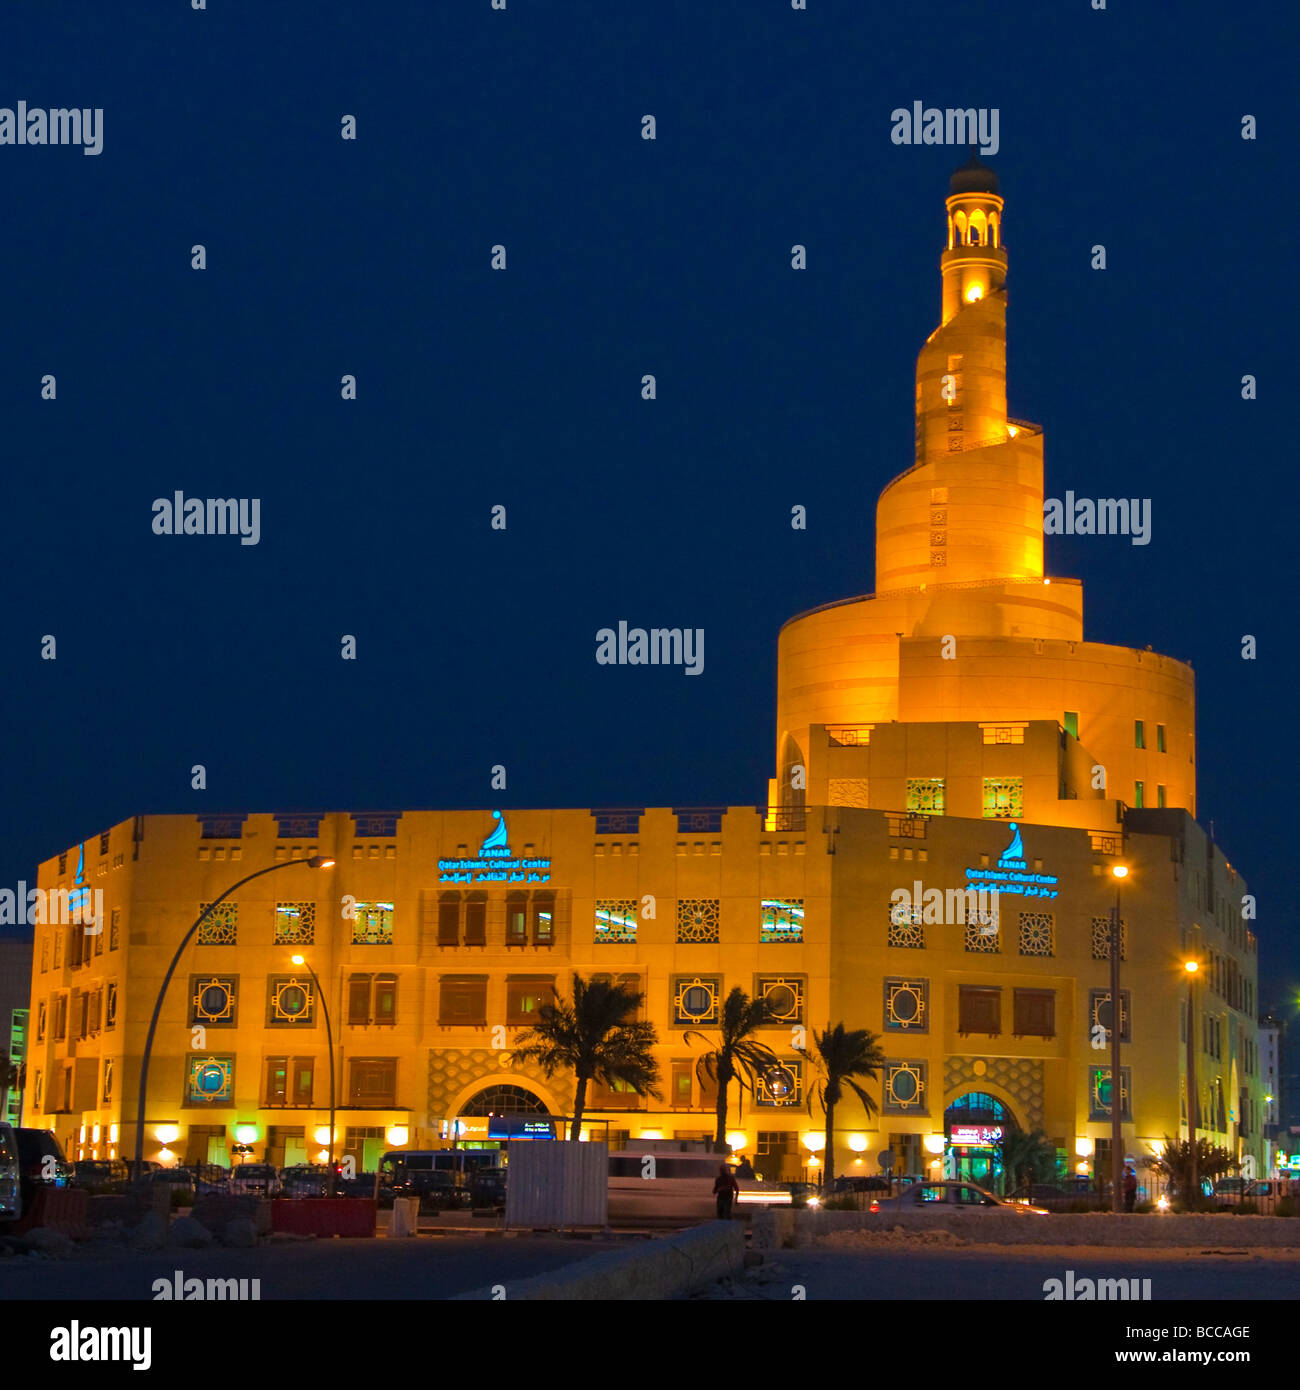 Doha, Katar.  Kassem Darwish Fakhroo Centre, Sitz des Islamischen Kulturzentrums Katar.  Nacht-Szene. Stockfoto